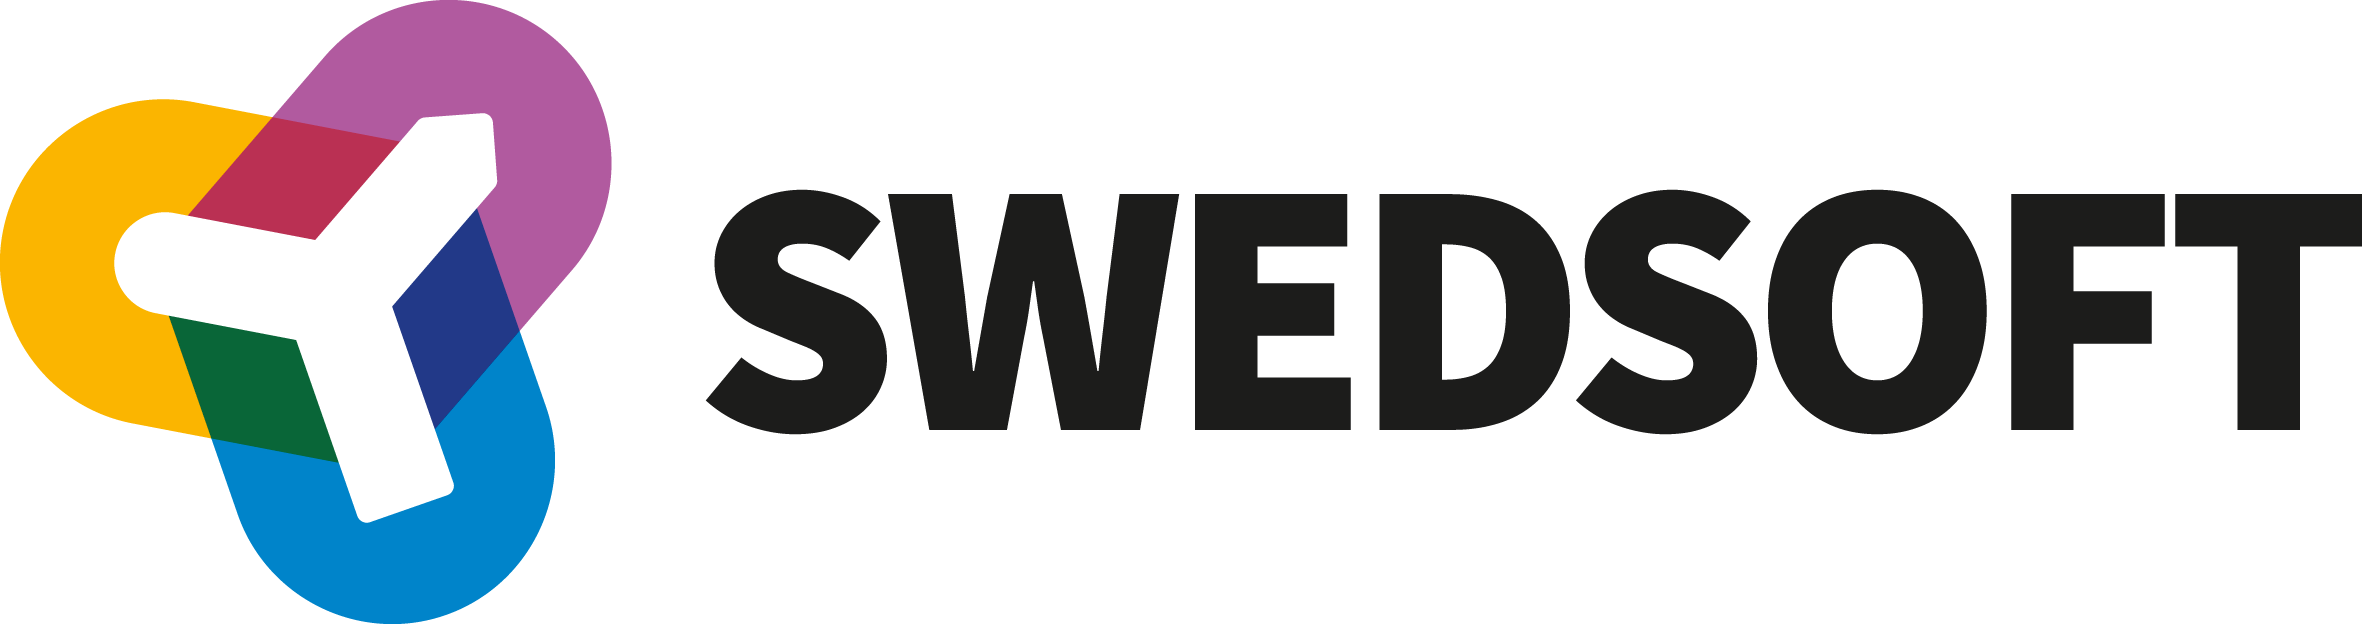 SWEDSOFT